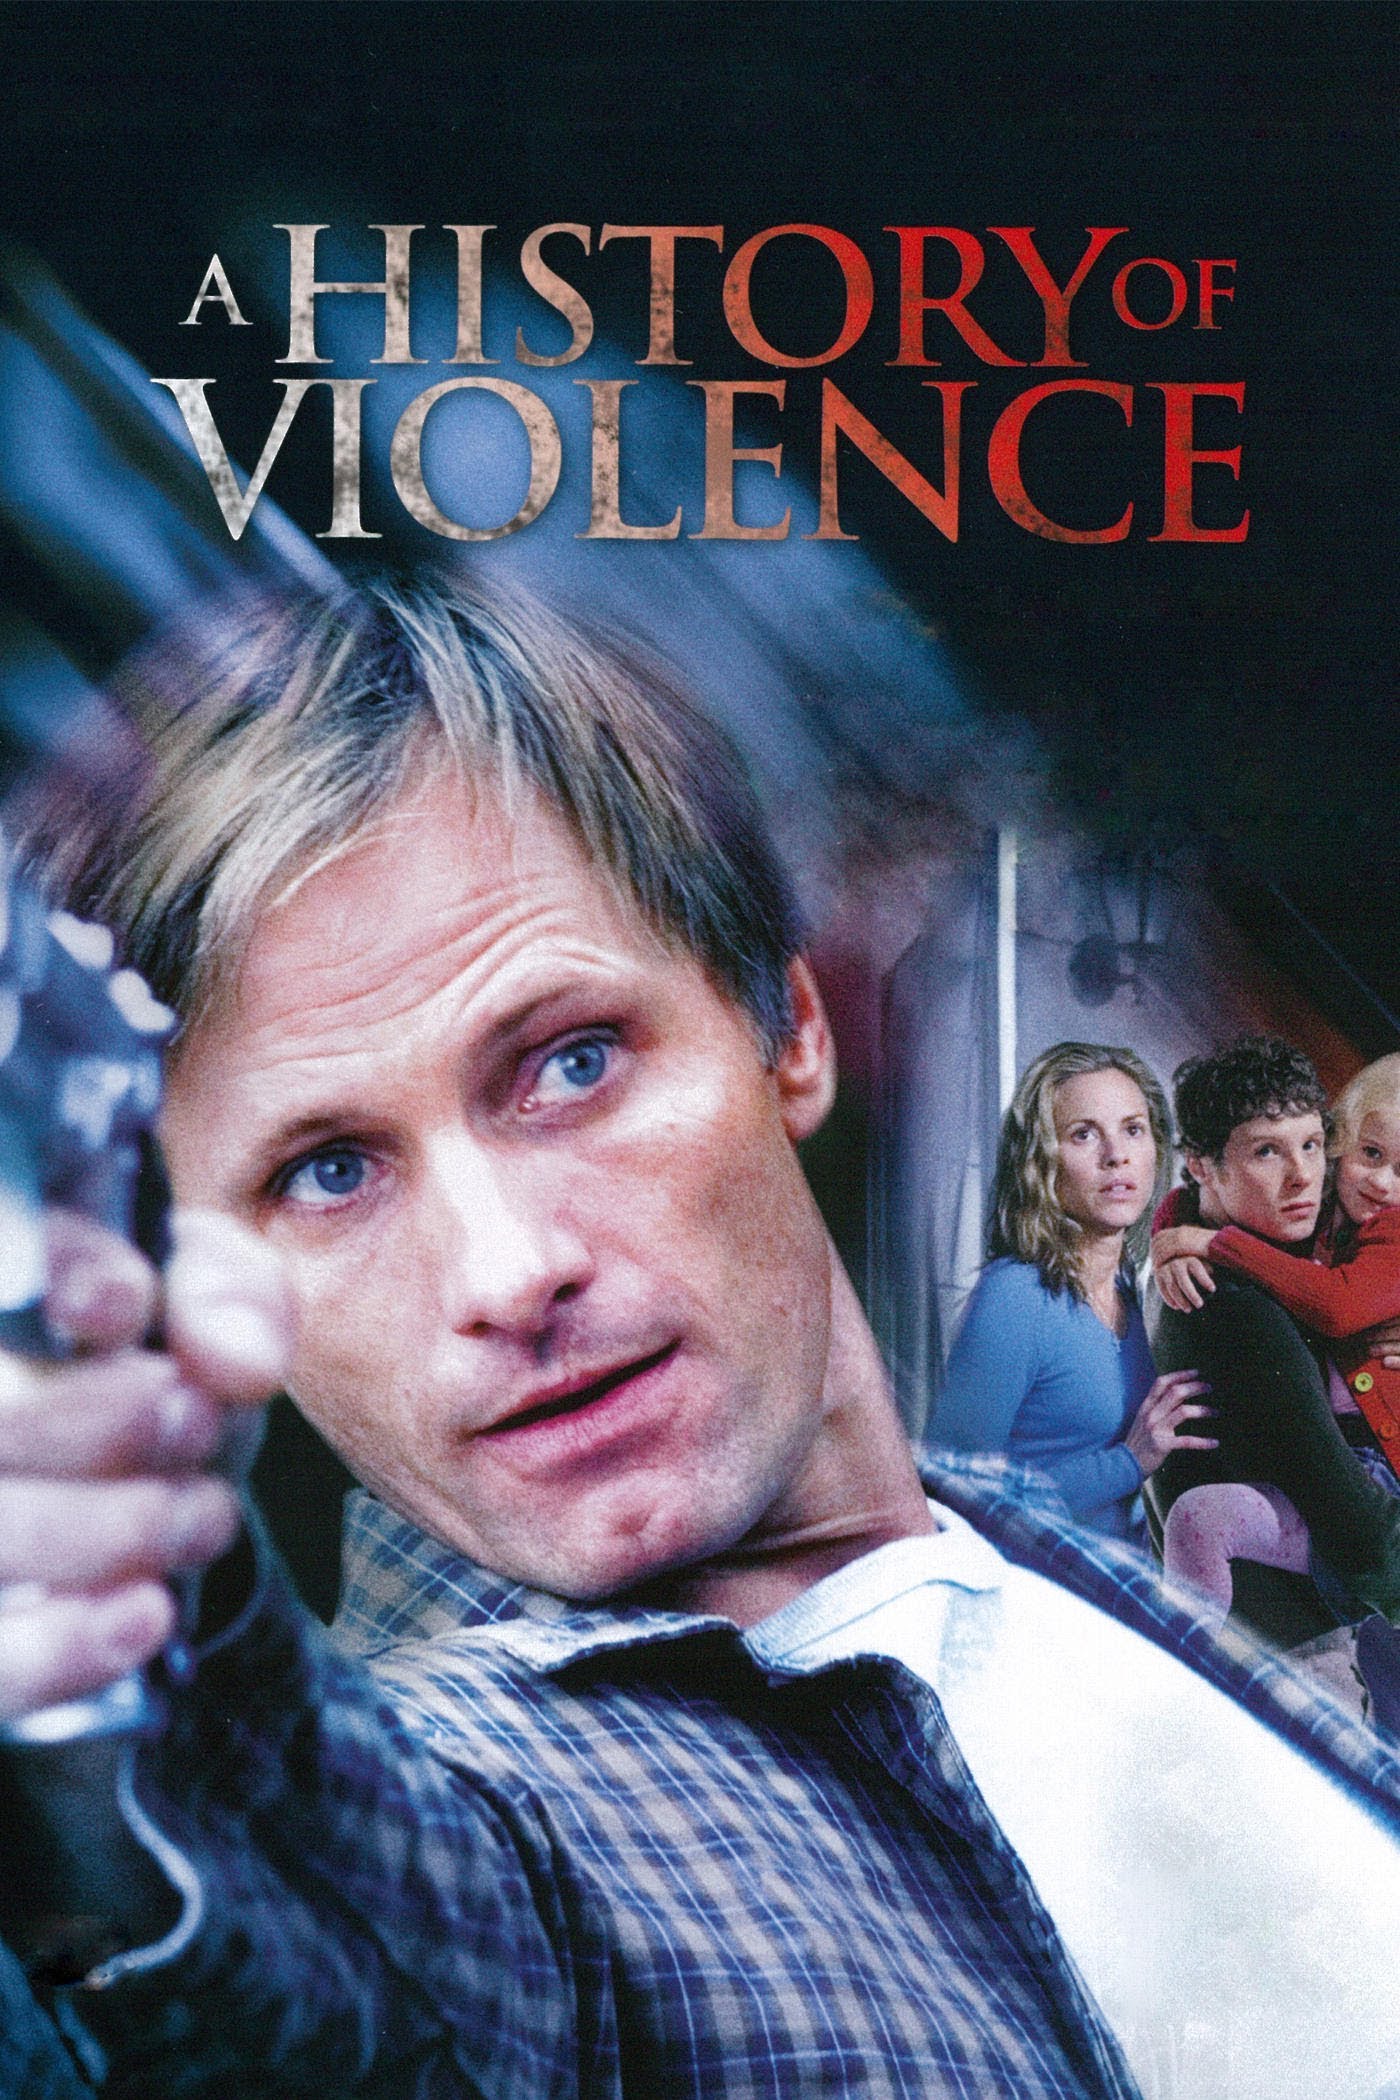 A history of violence [HD] (2005)